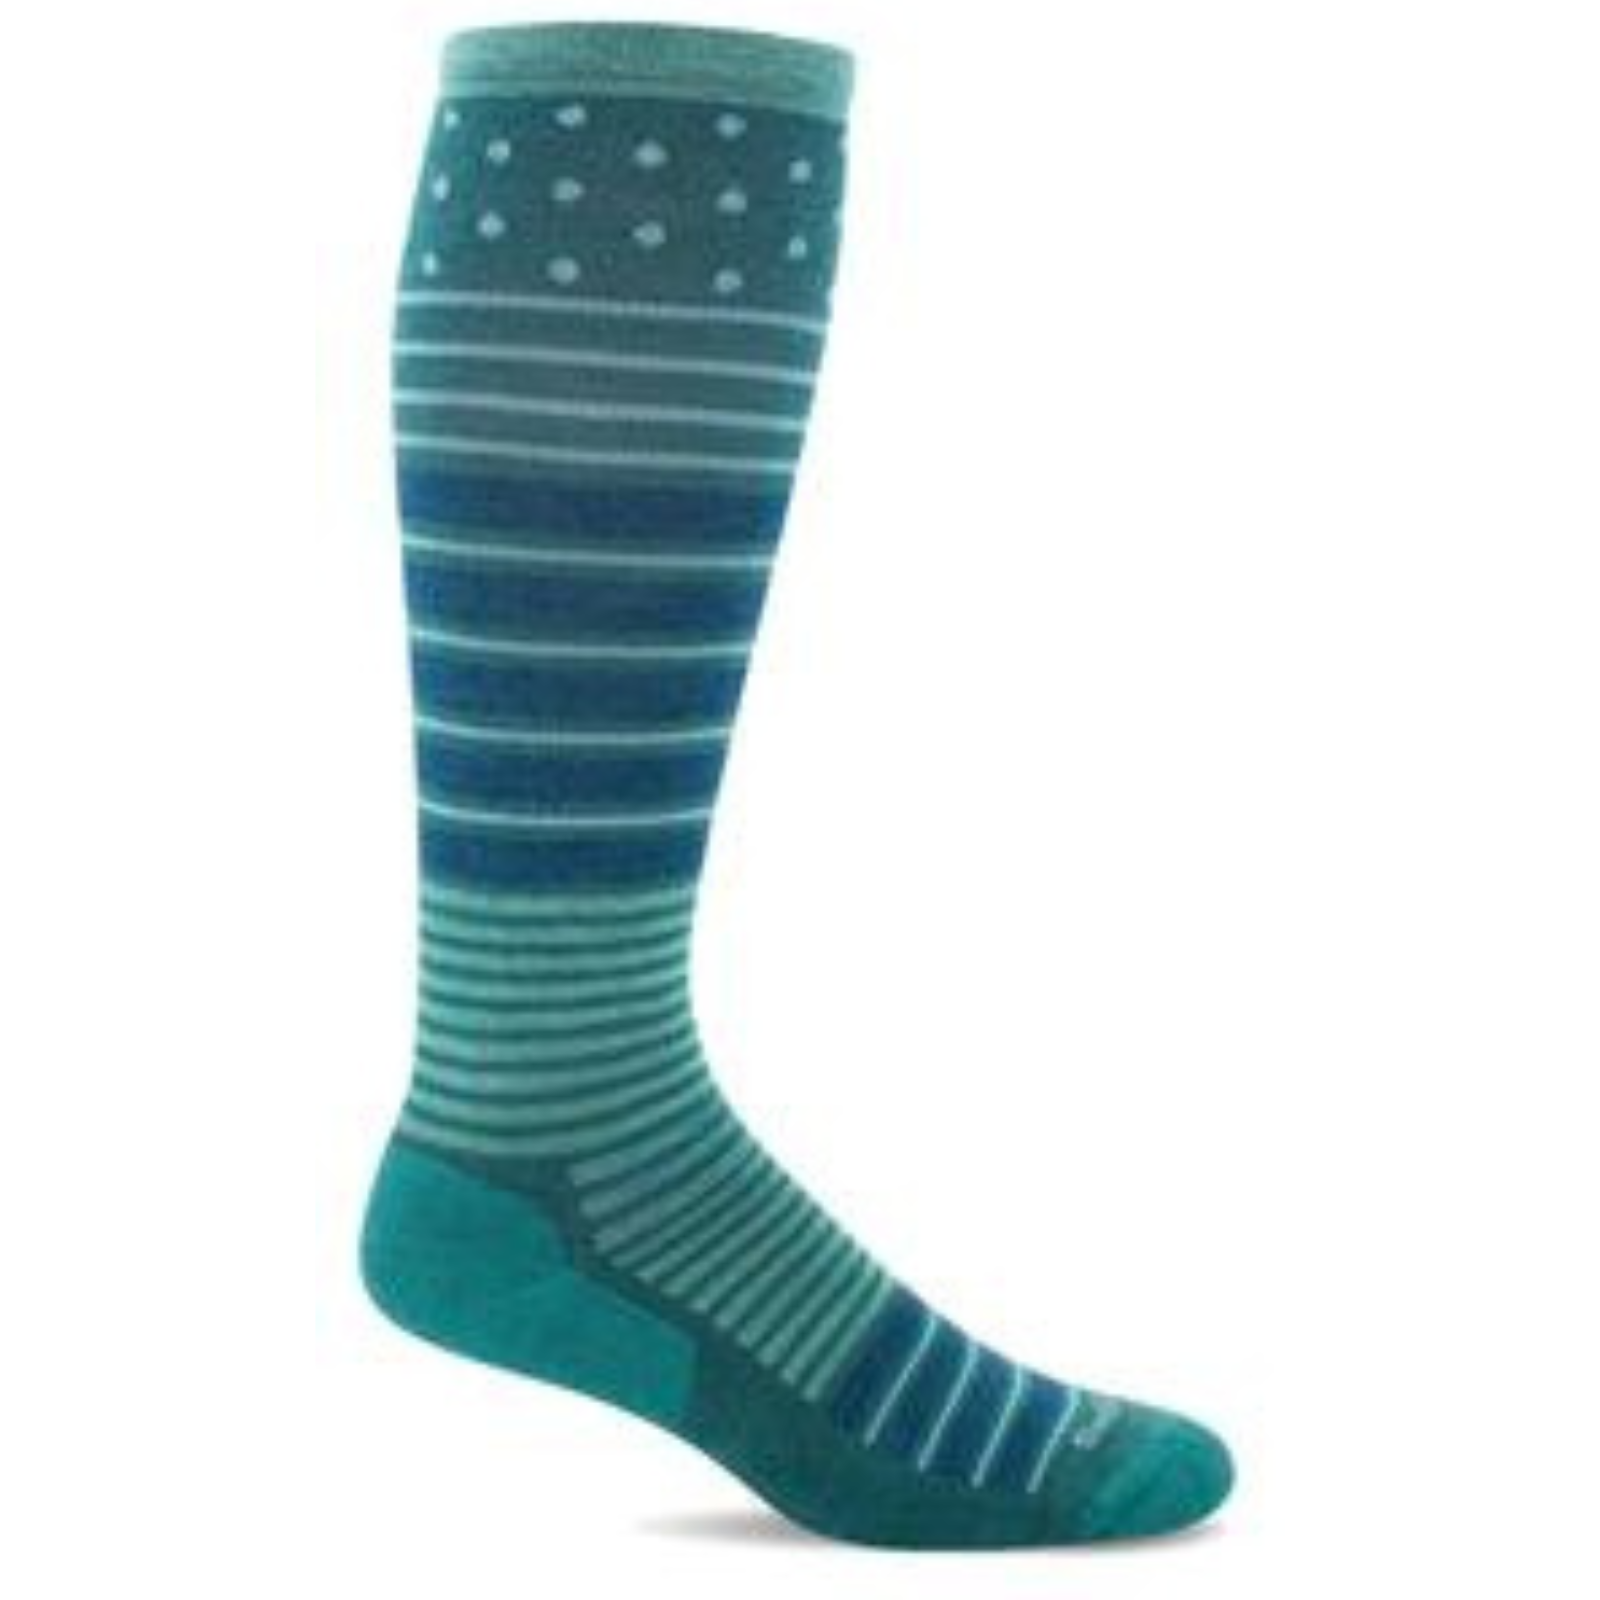 Sockwell Twister firm graduated compression (20-30 mmHg) women's jade knee high sock featuring polka dots and stripesa